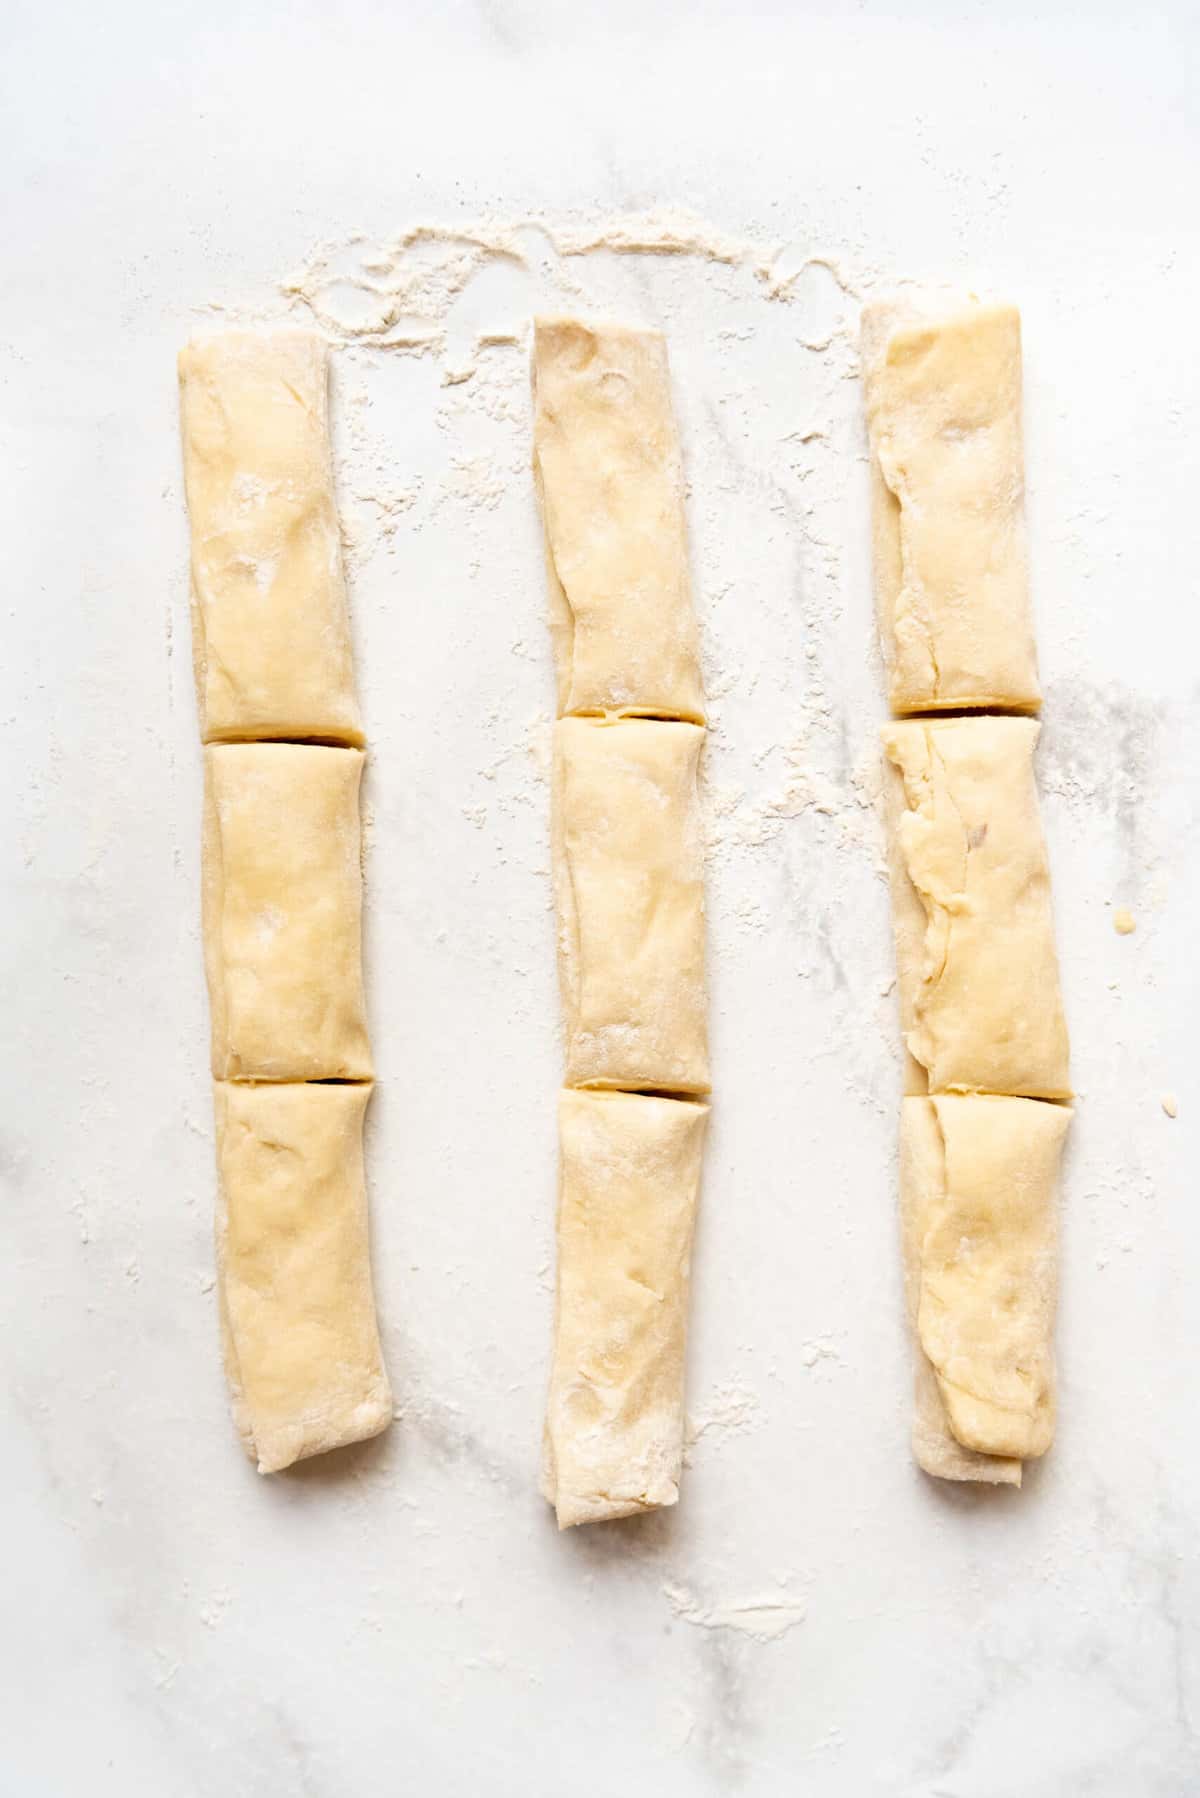 Three rows of bear claw dough cut into thirds.